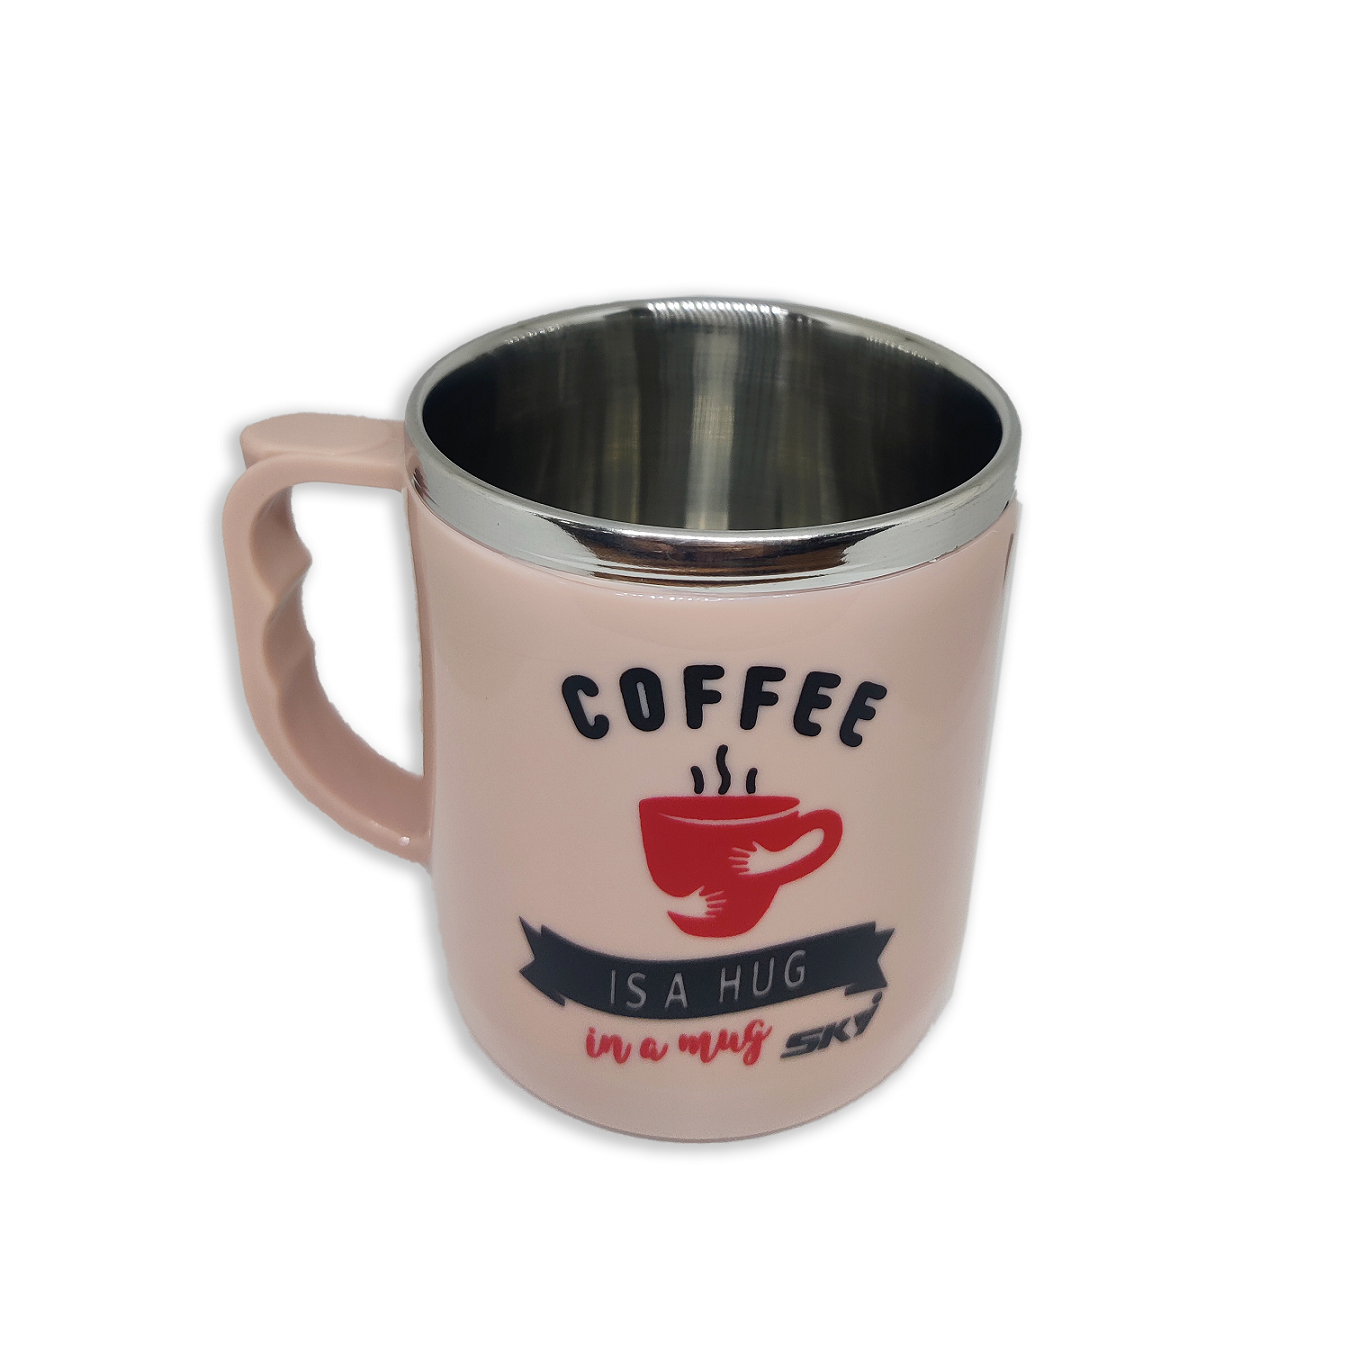 Jolly Steel Big Cream Coffee Mug